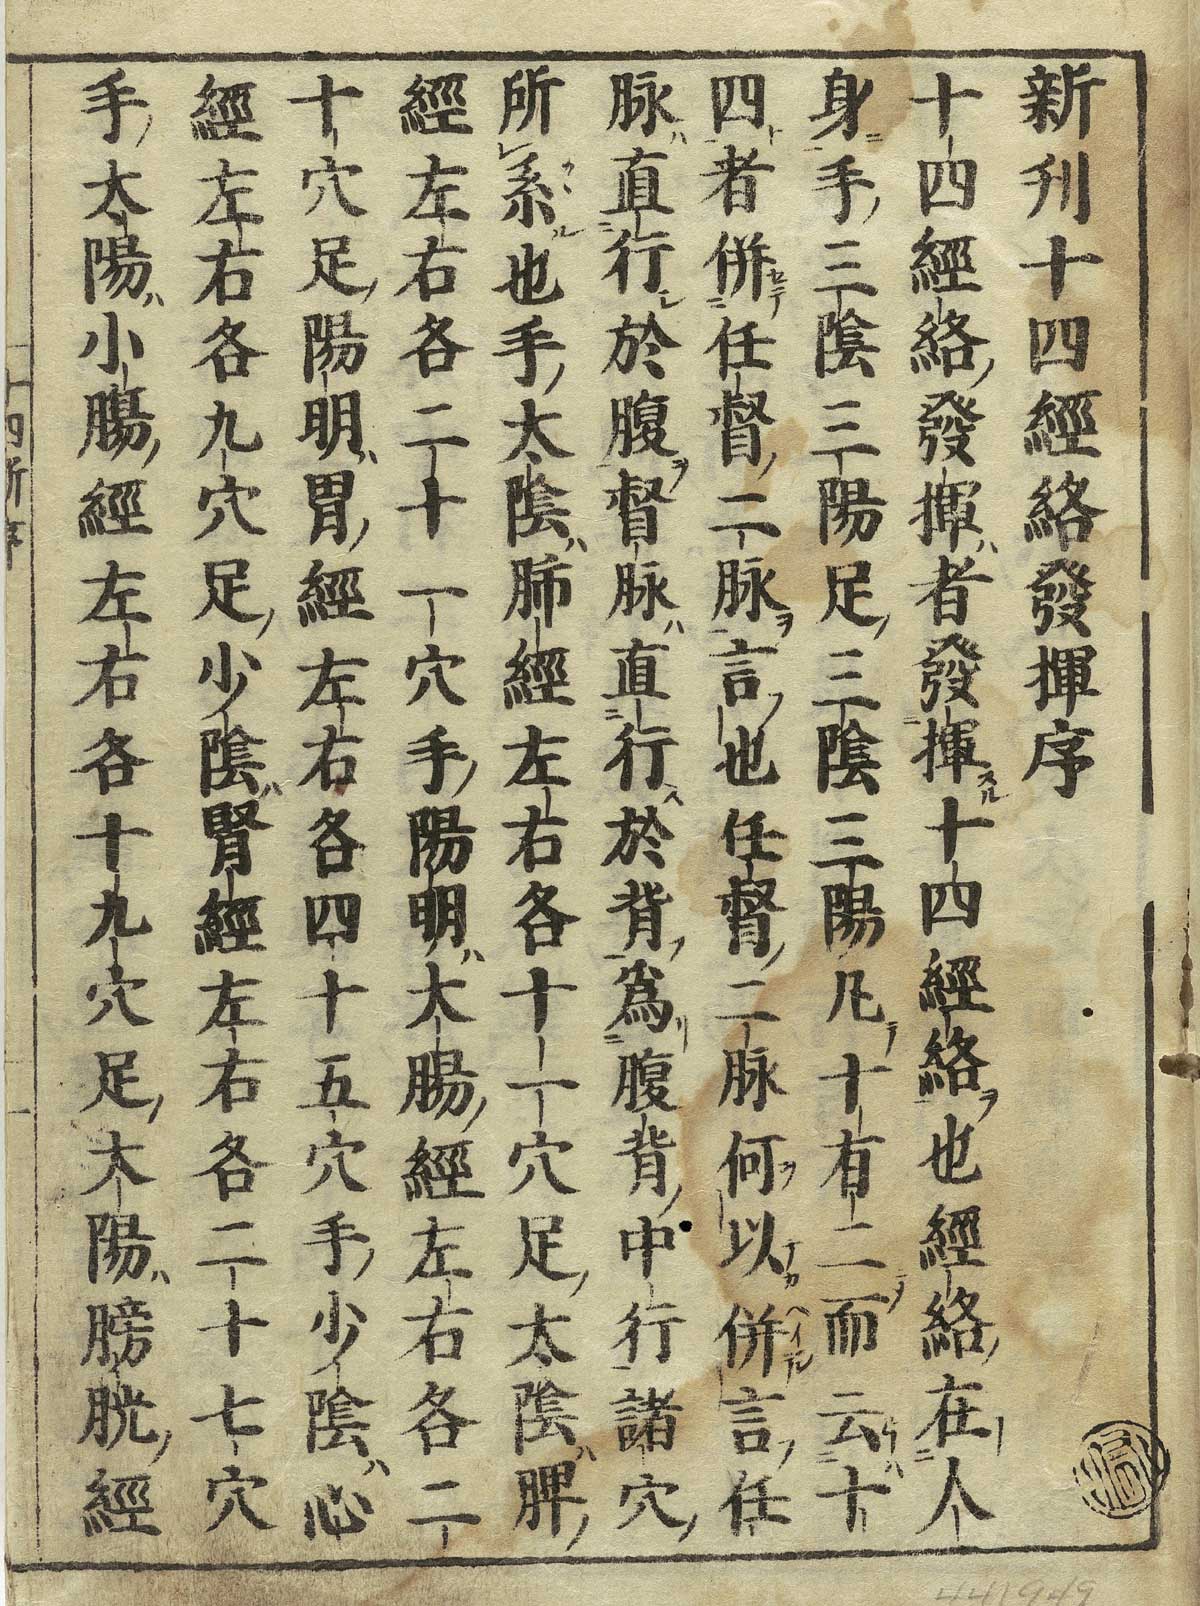 Woodcut title page in Chinese of Hua Shou’s Jushikei hakki, NLM Call no.: WZ 260 H868s 1716.